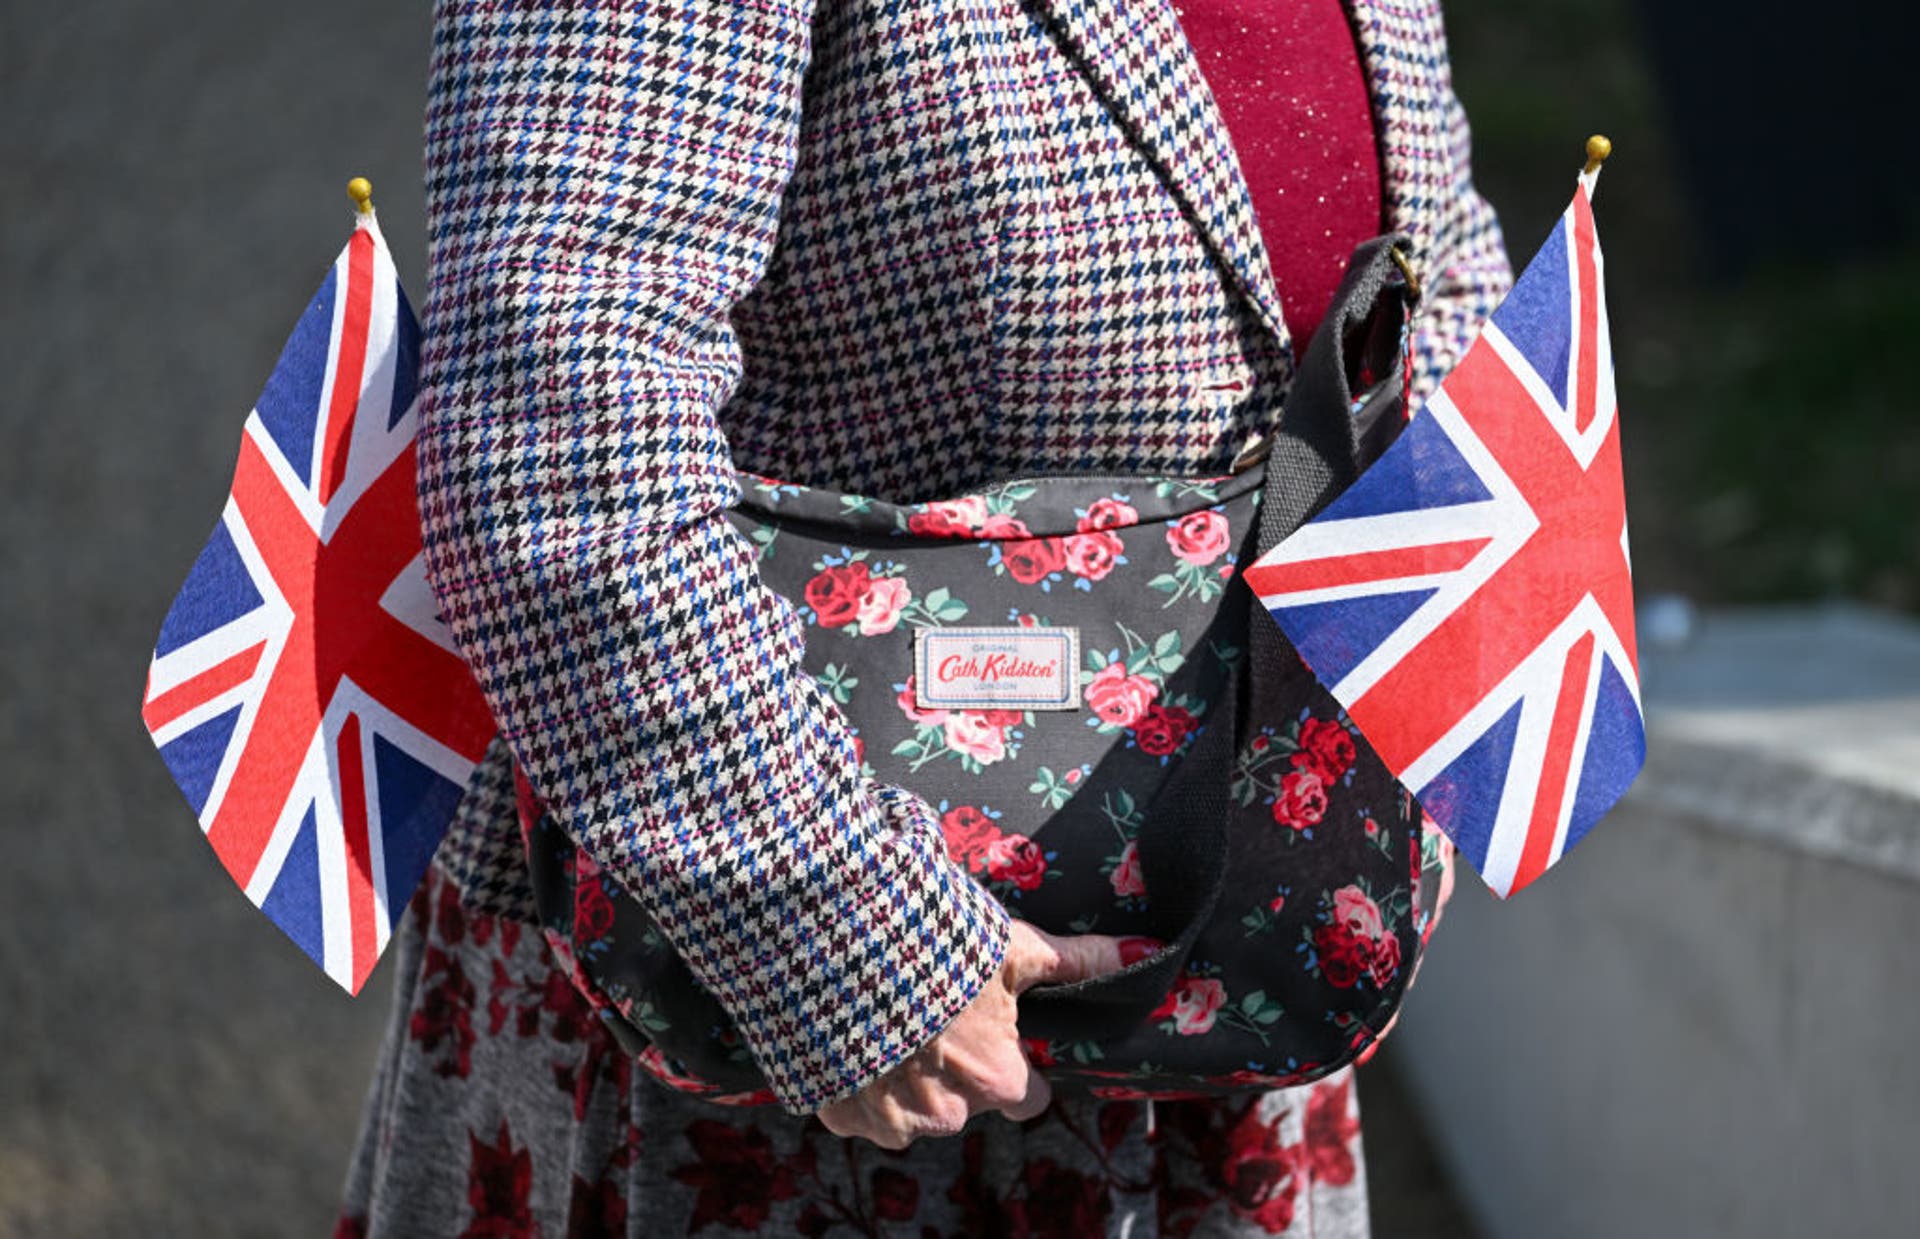  A woman holds a Cath Kidston handbag and Union Jack flags 